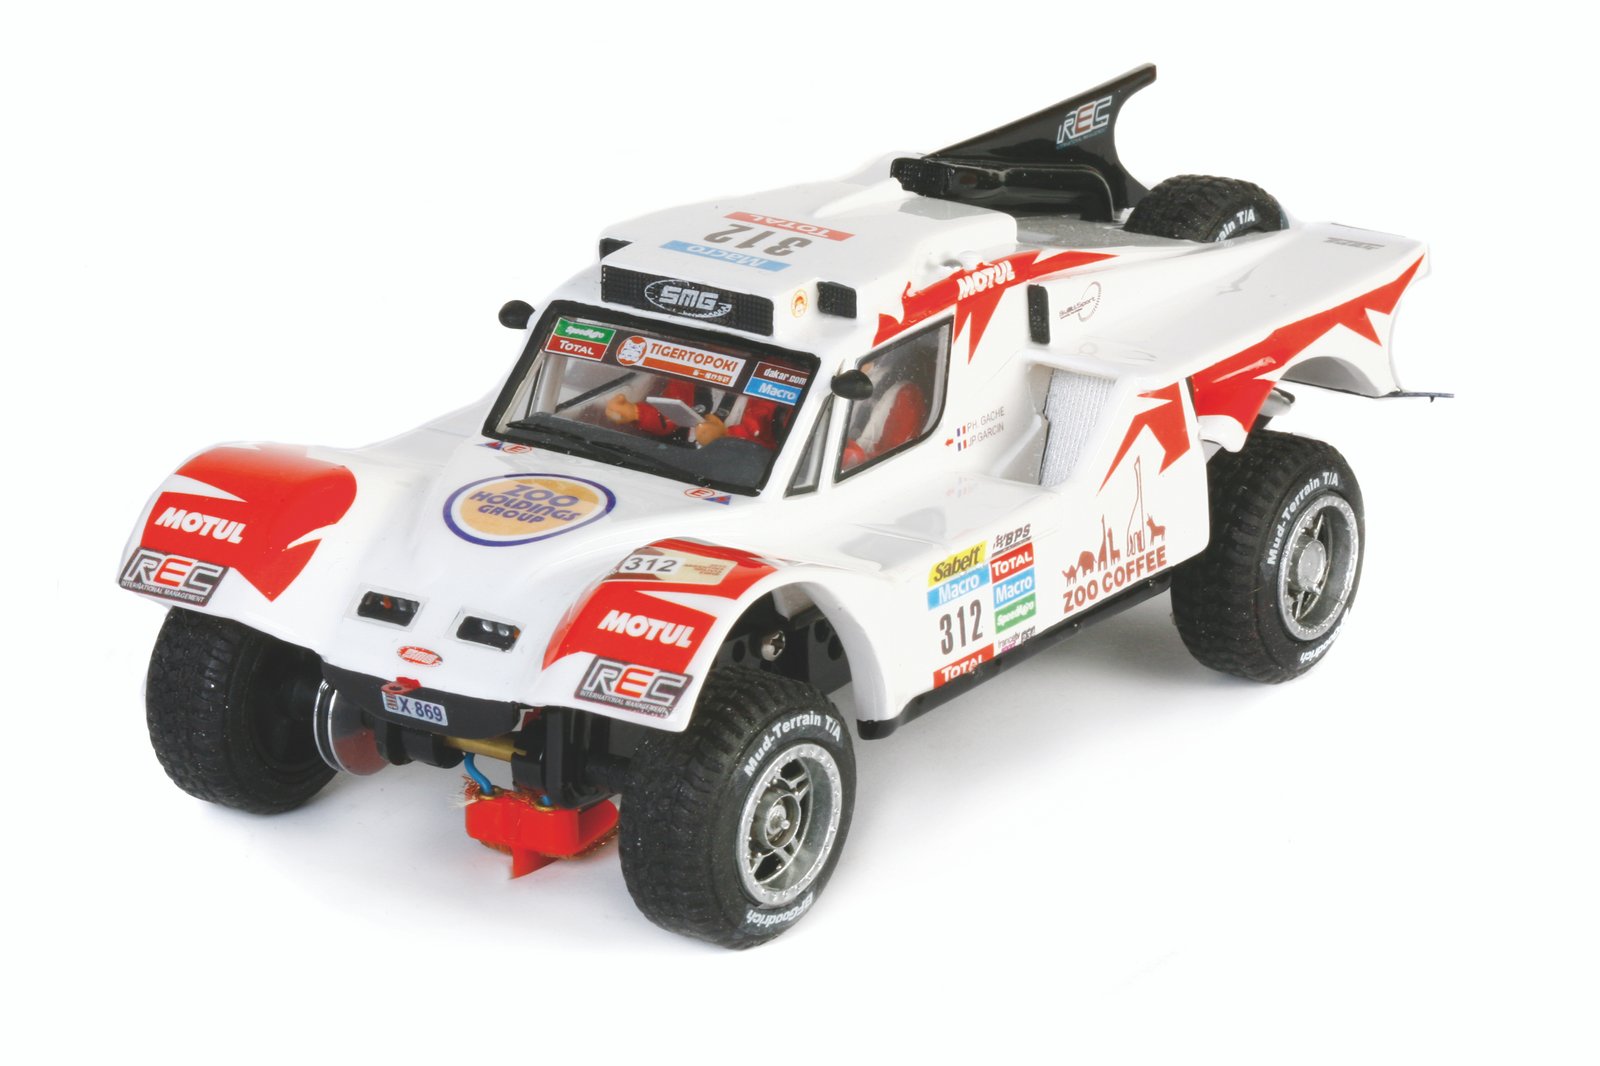 Maralic & RSC: Le Buggy SMG du Dakar 2014 est disponible - slot